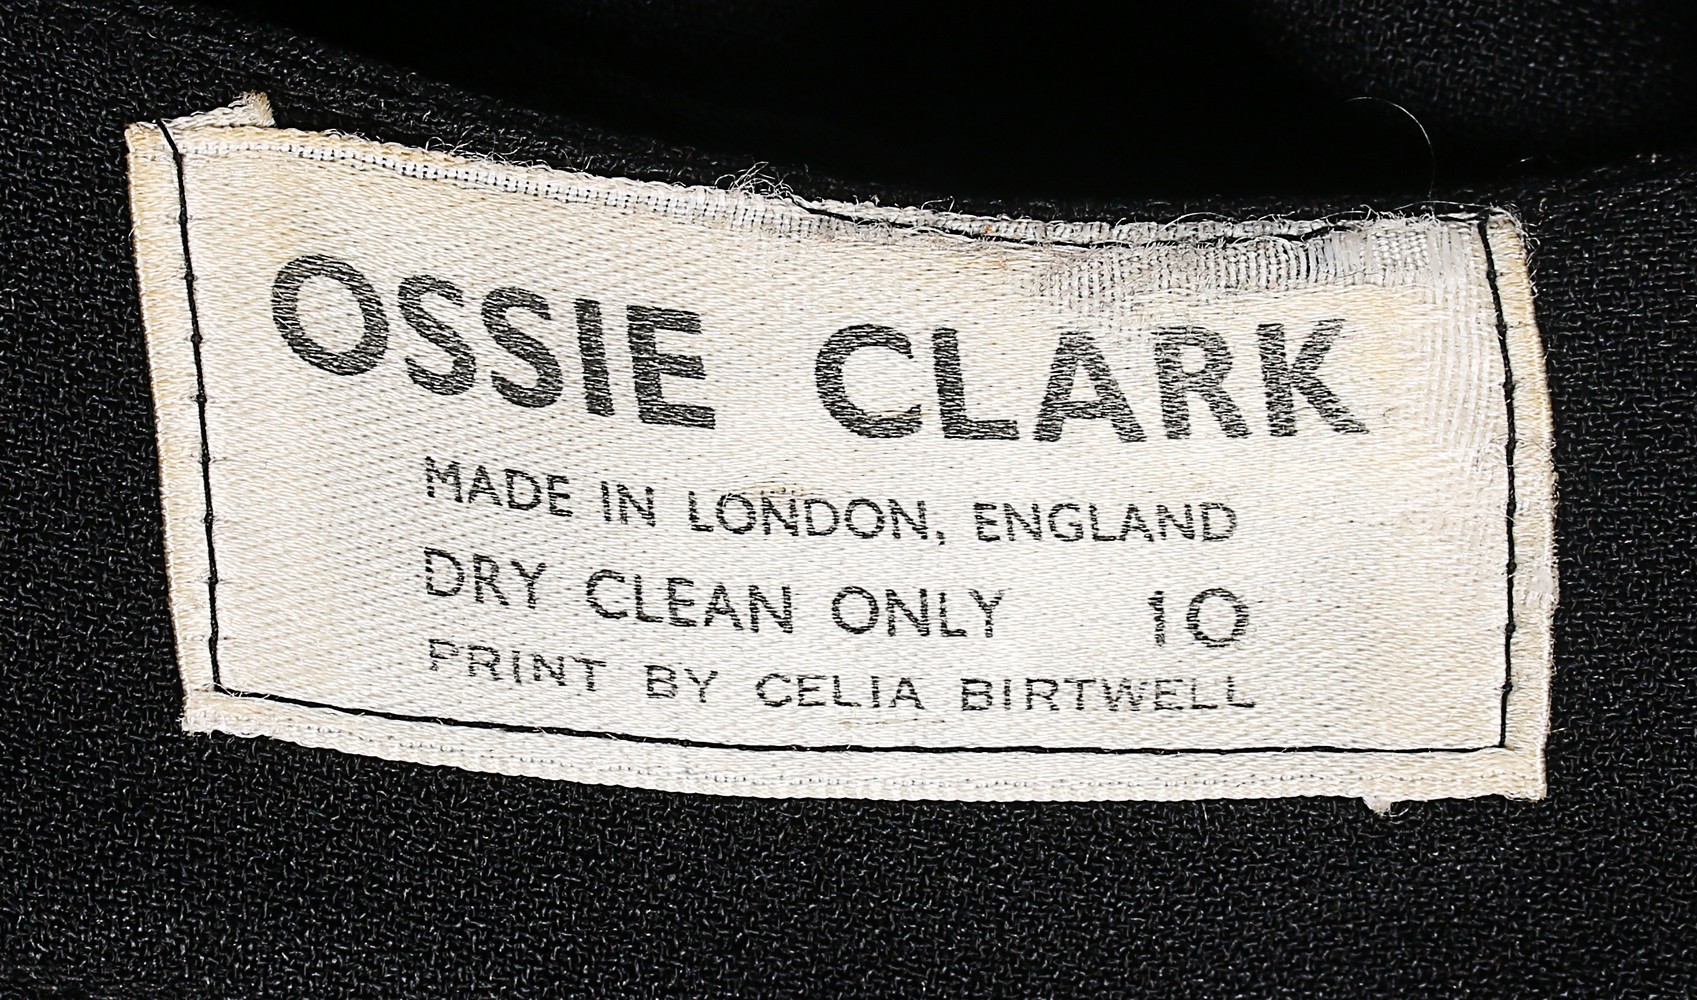 Lot 32 - An Ossie Clark black moss crêpe dress, mid